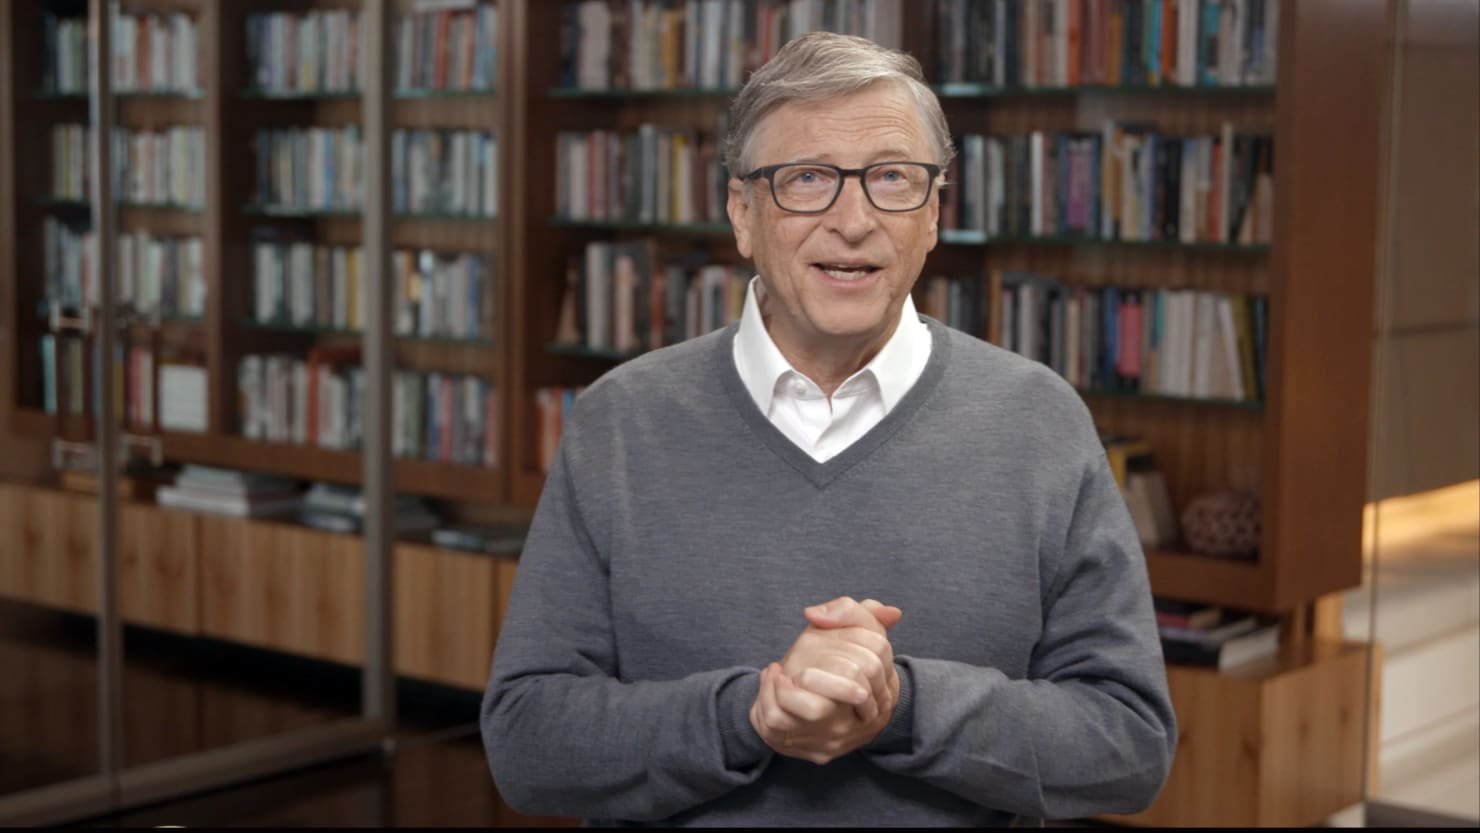 Bill Gates Admits to Affair That Triggered Microsoft Probe